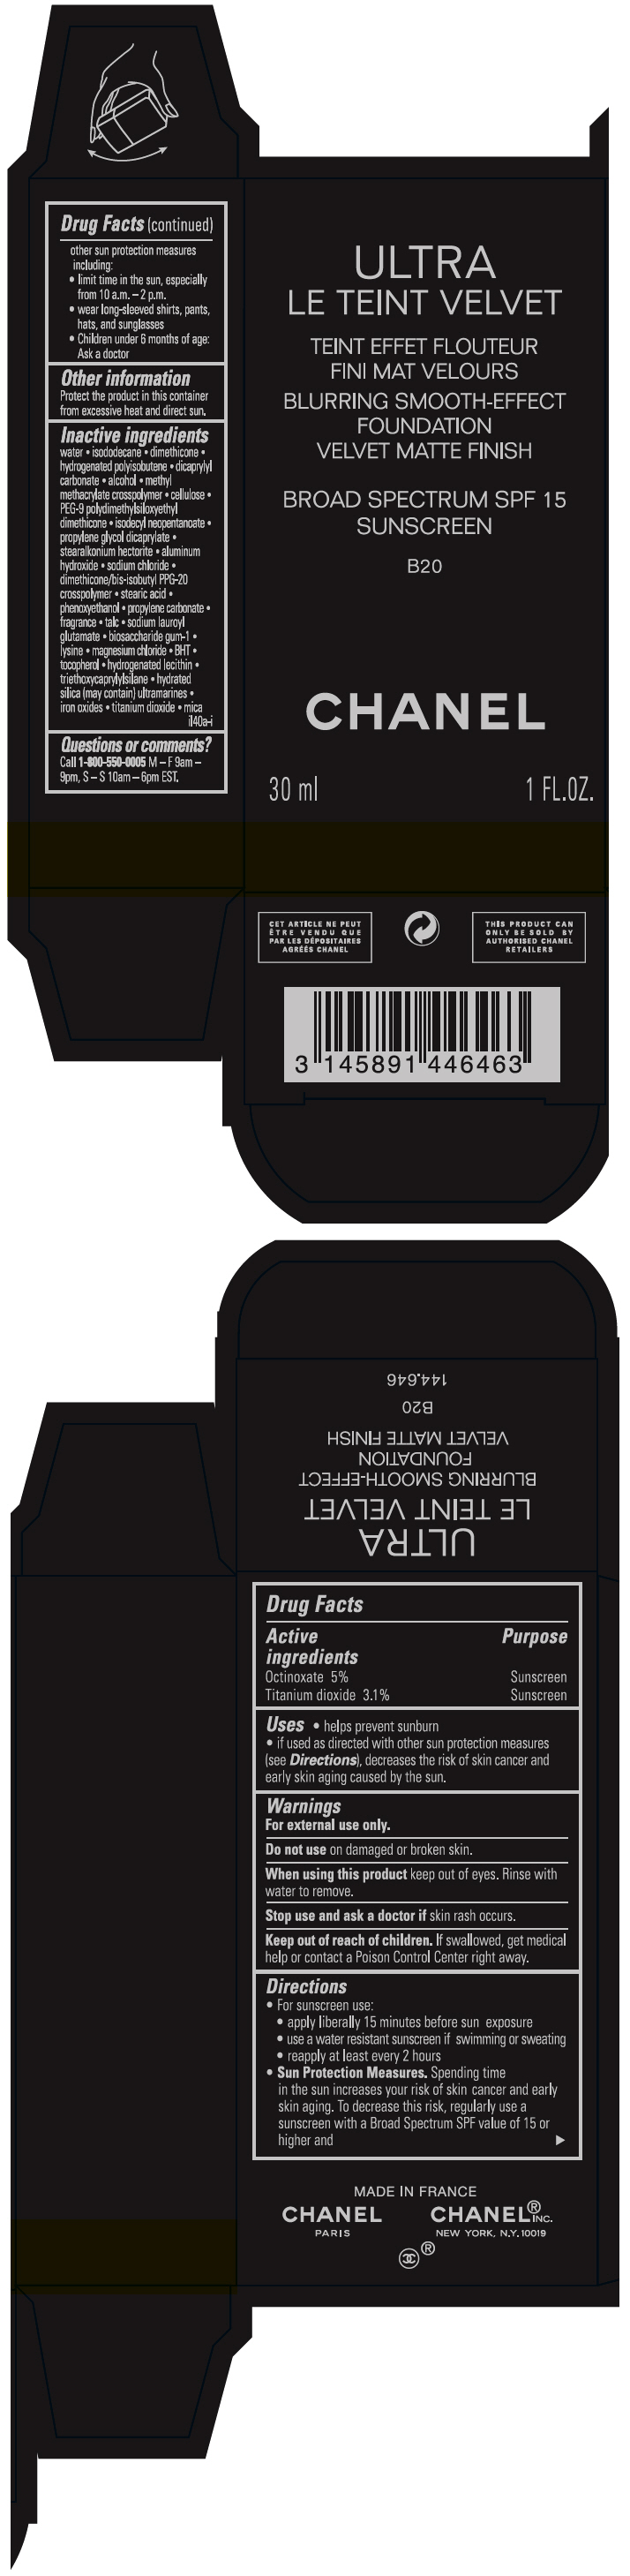 PRINCIPAL DISPLAY PANEL - 30 ml Bottle Carton - B20